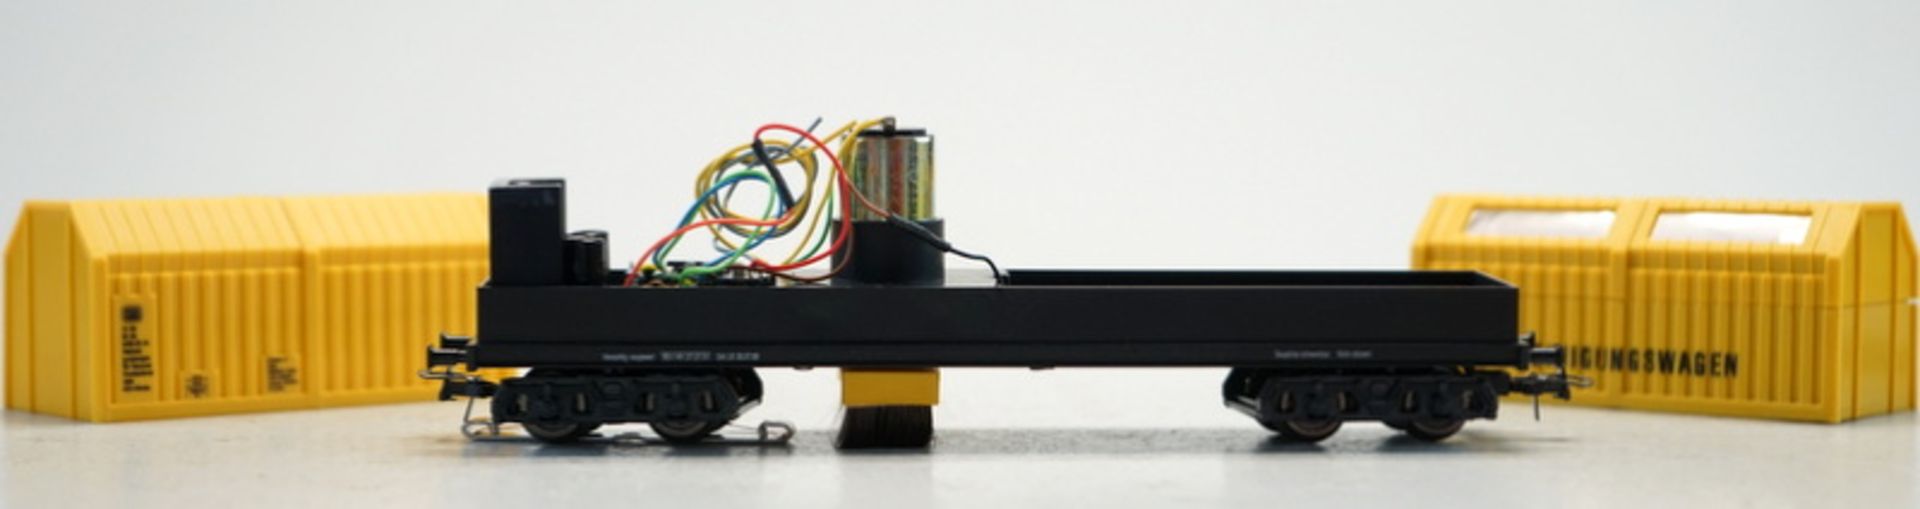 LUX-Modellbau: #8820 Gleisstaubsauger, Spur H0 digital. - Image 3 of 4